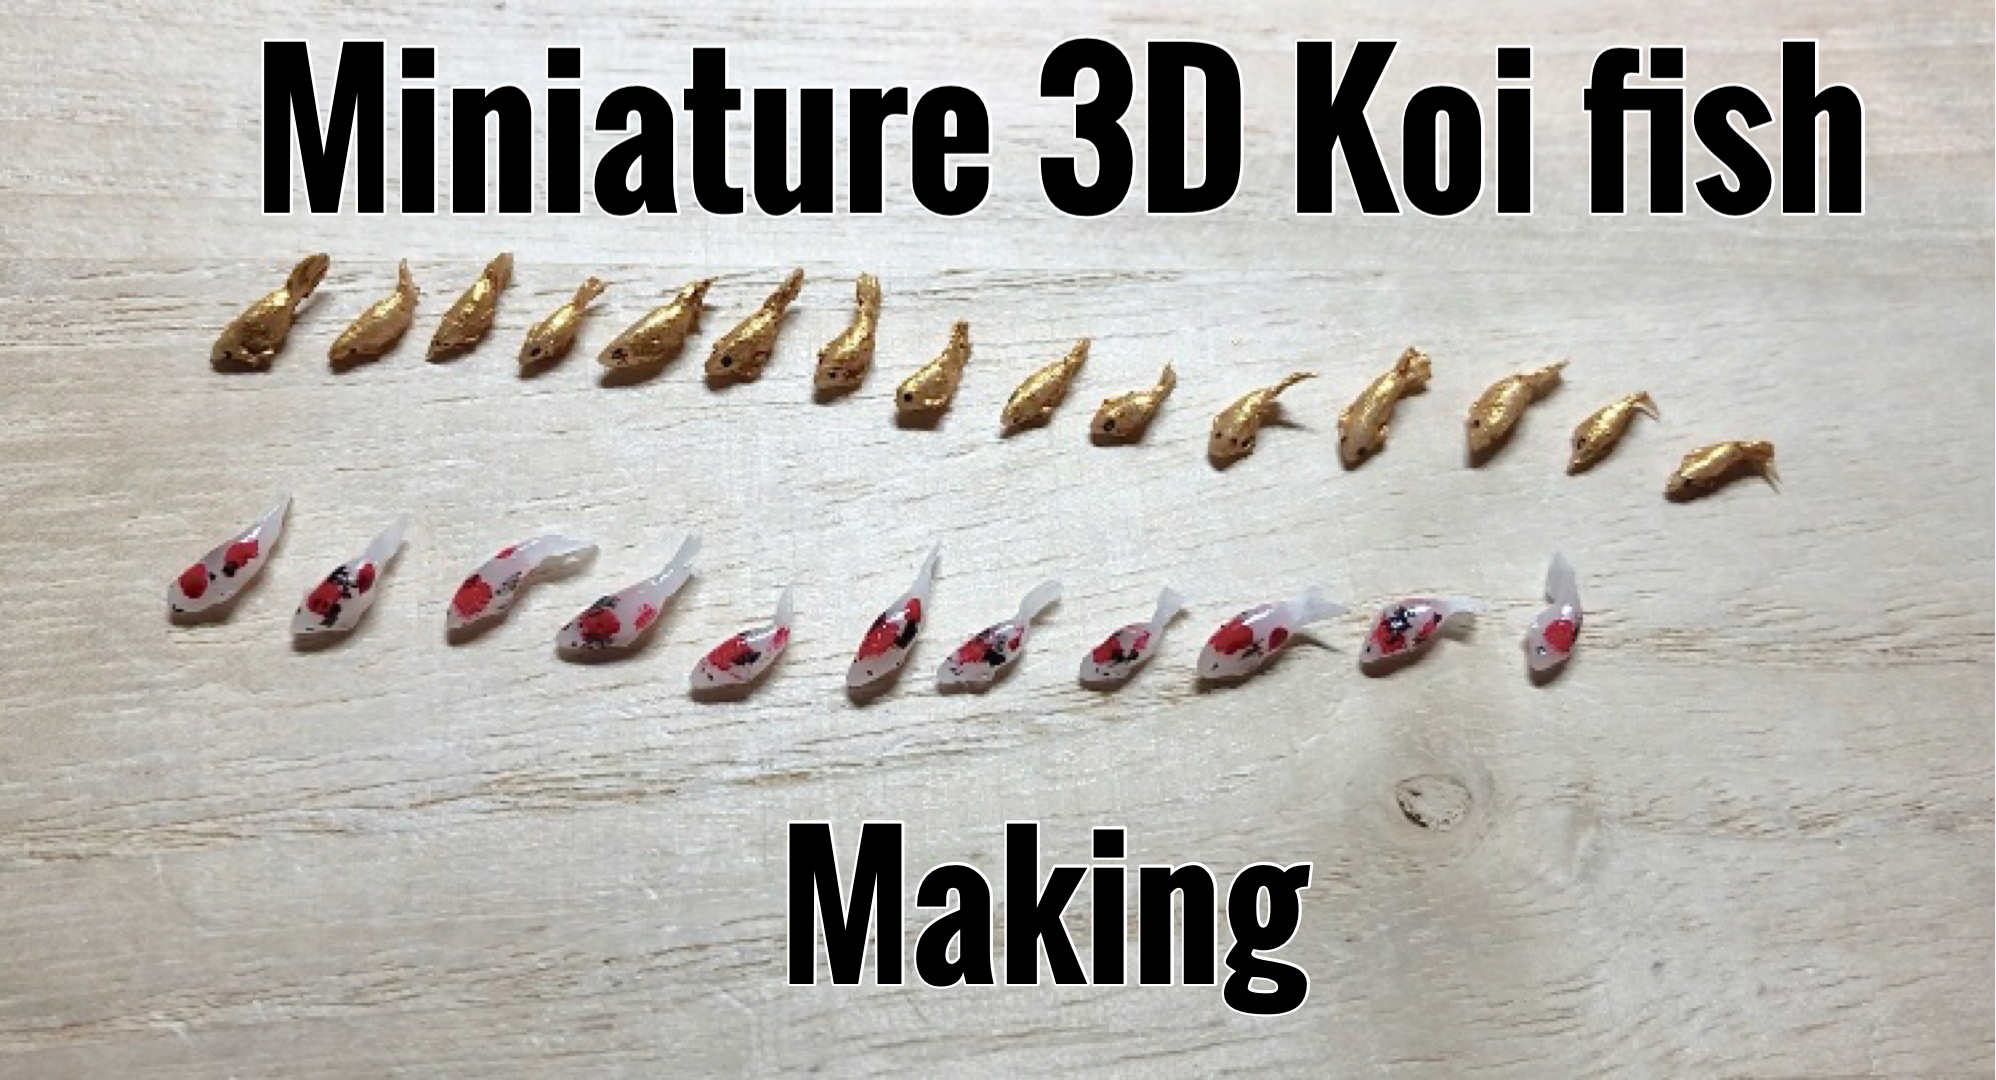 miniature 3D koi fish making YouTube video